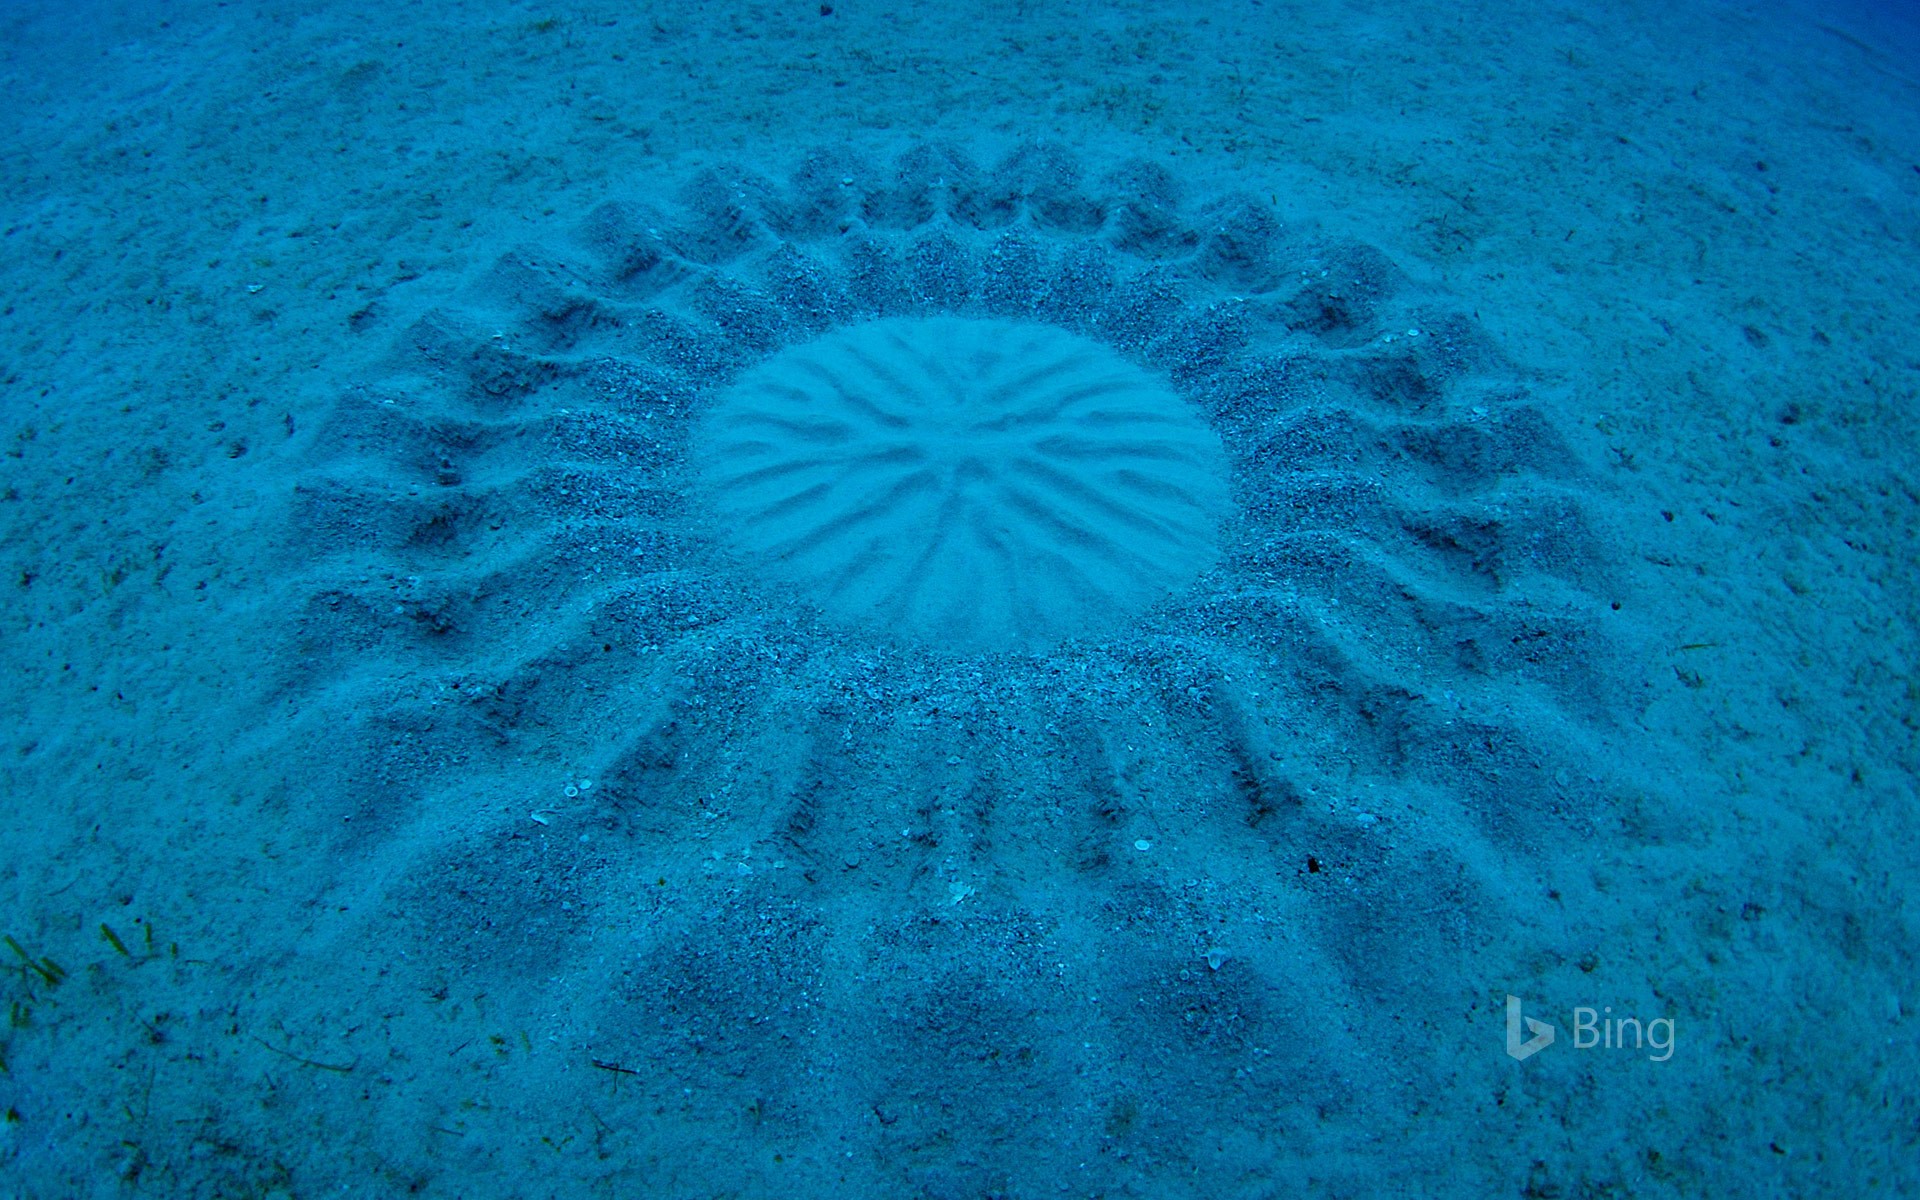 Sand patterns made by pufferfish near Amami Oshima, Kagoshima, Japan